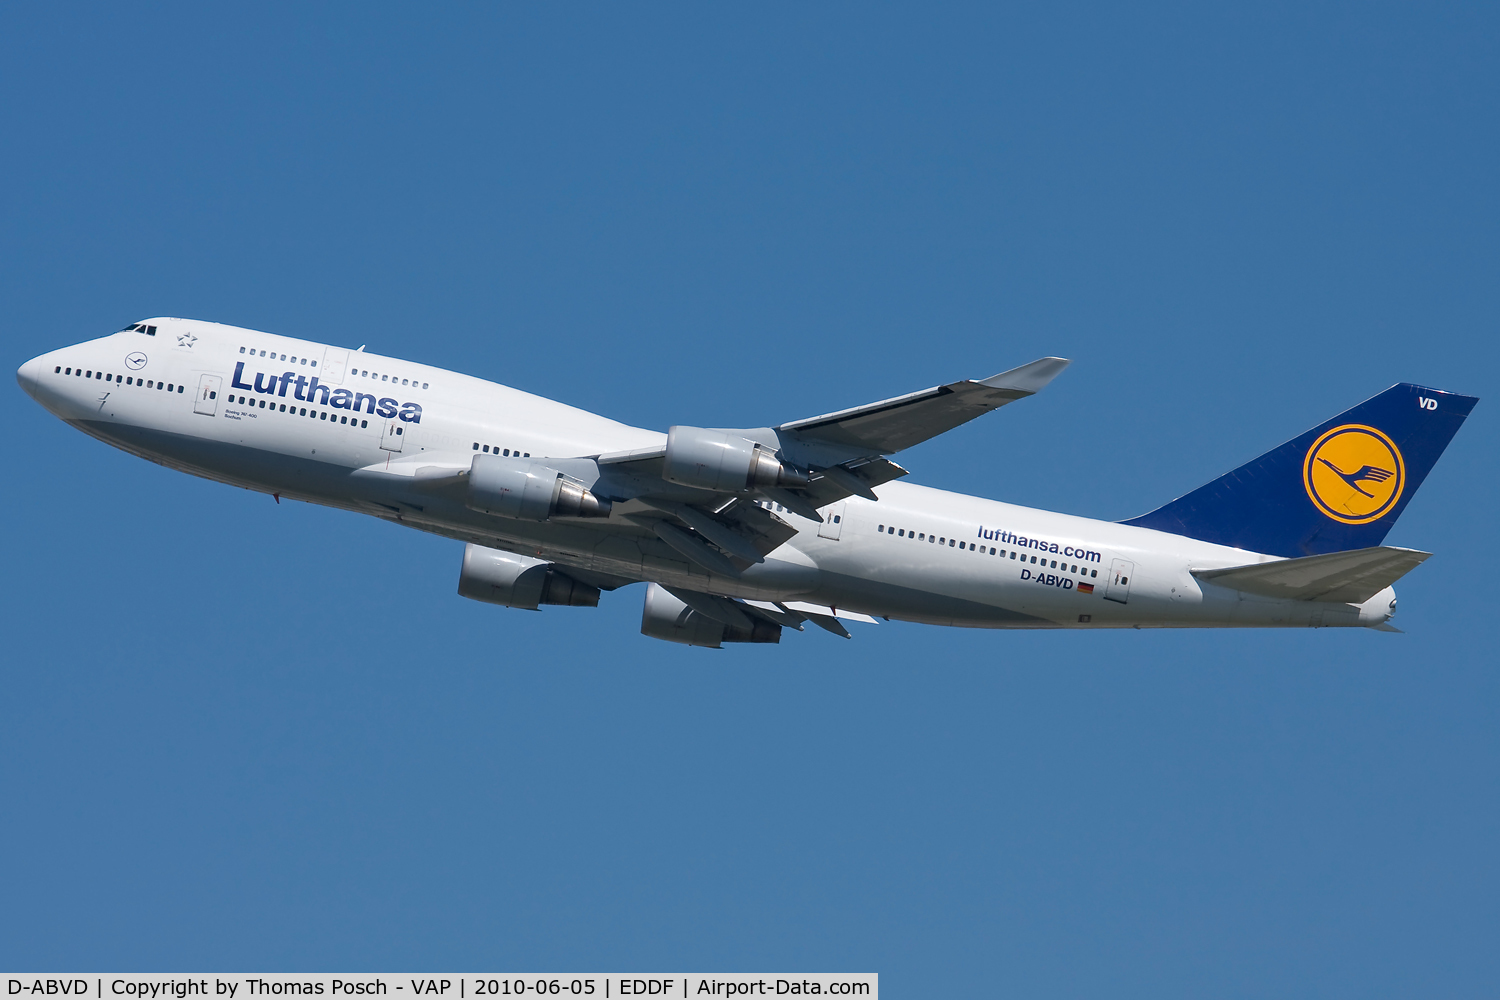 D-ABVD, 1990 Boeing 747-430 C/N 24740, Lufthansa